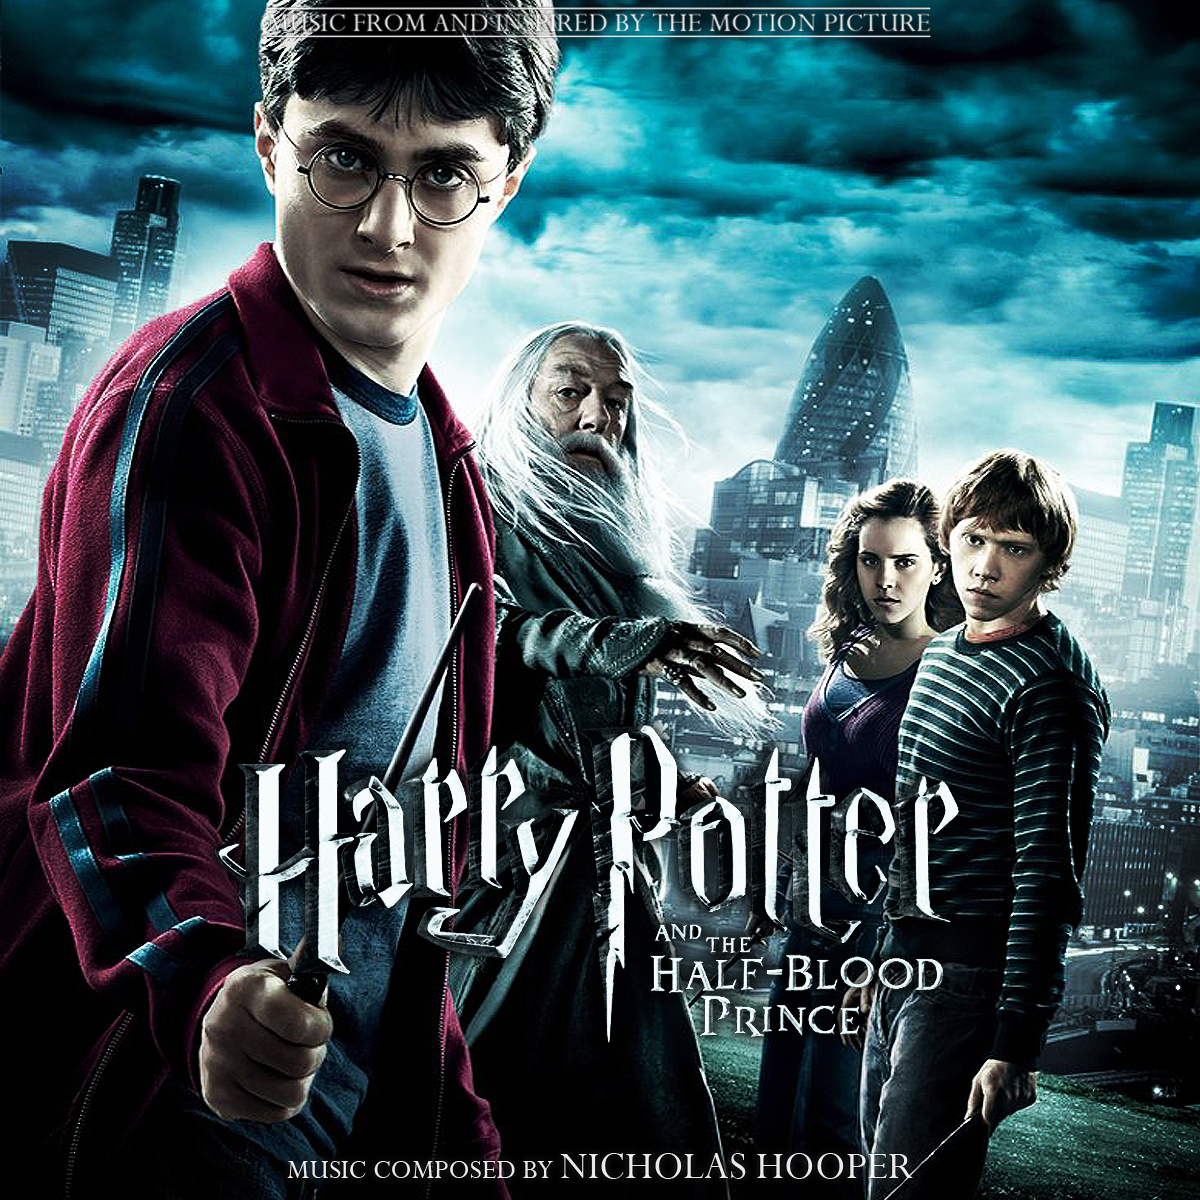 Harry Potter and the Half-Blood Prince Album Artwork